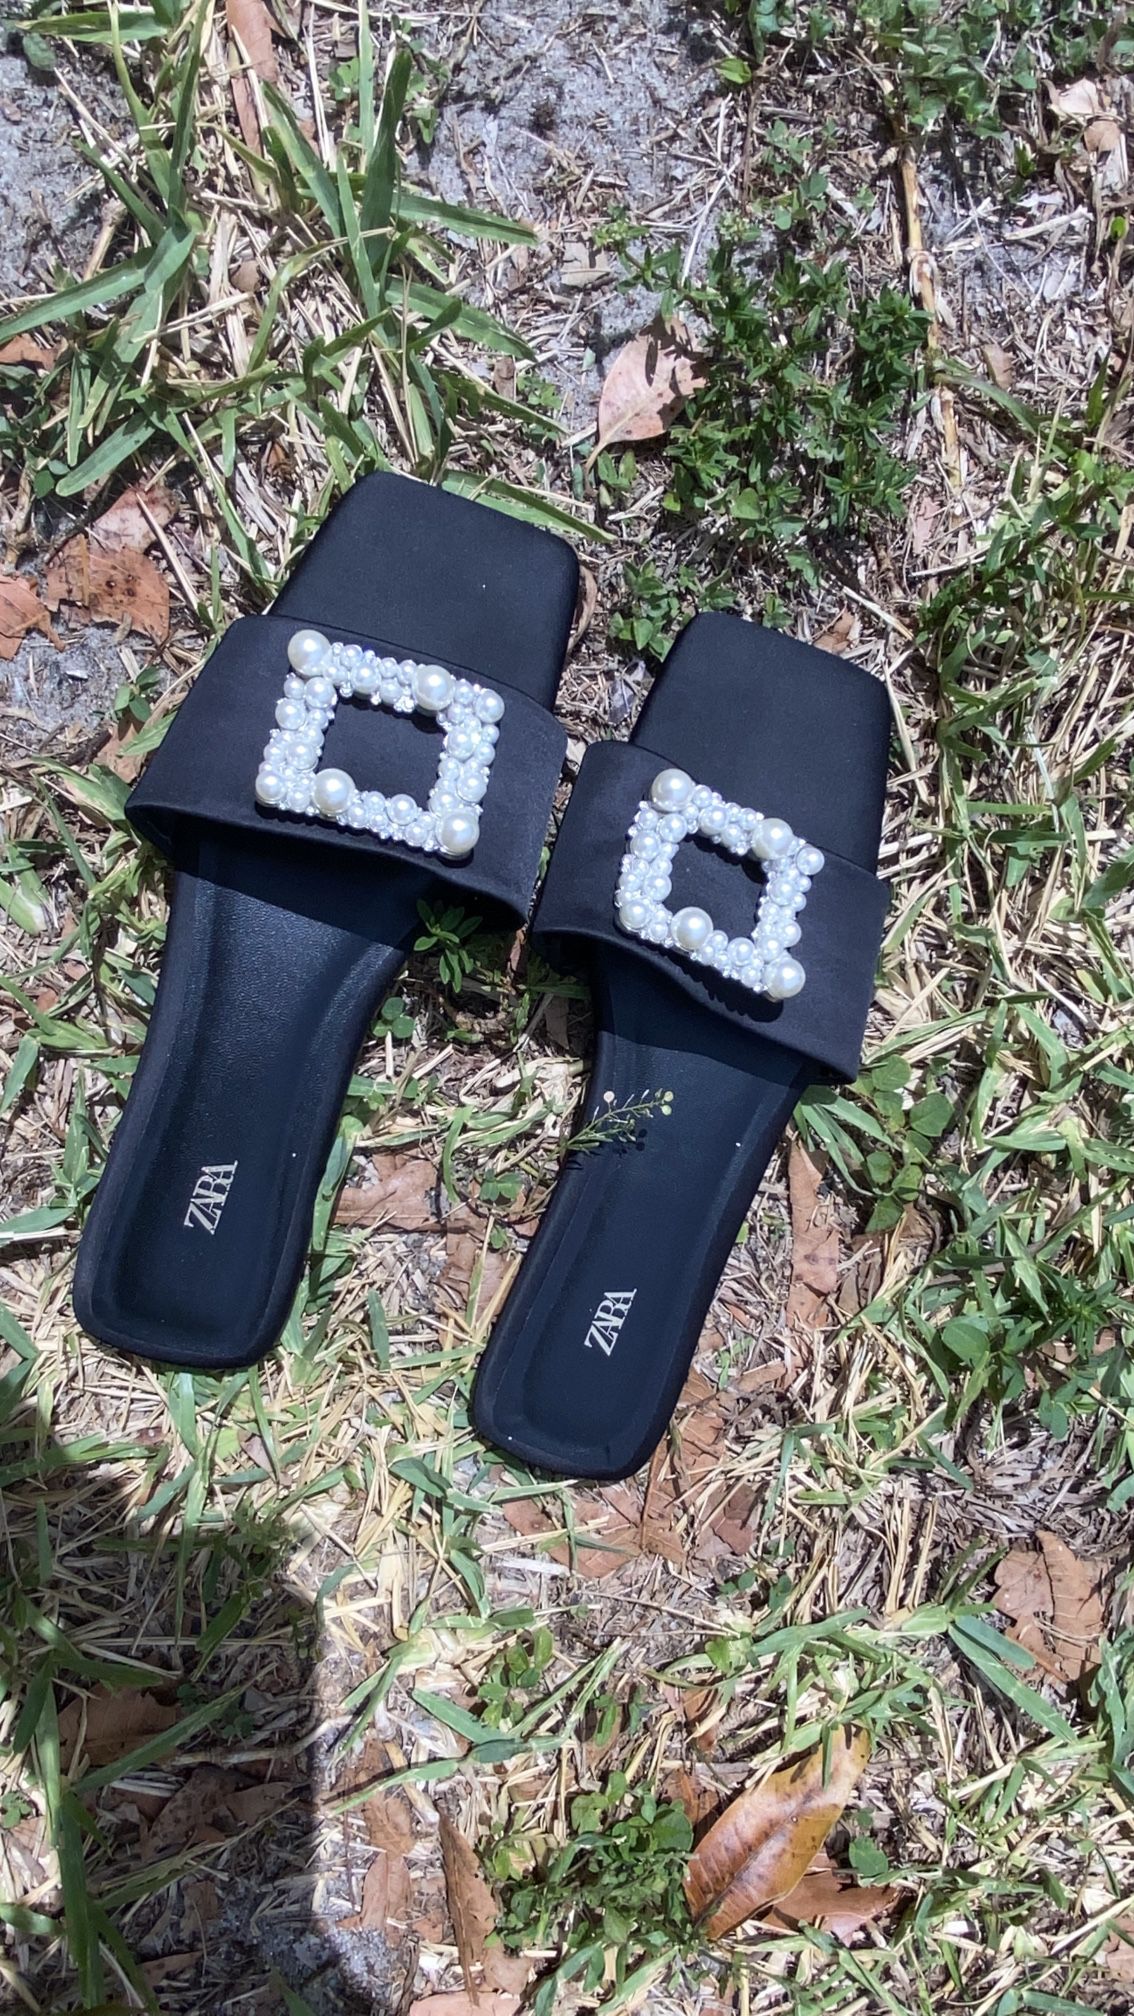 zara black sandals 